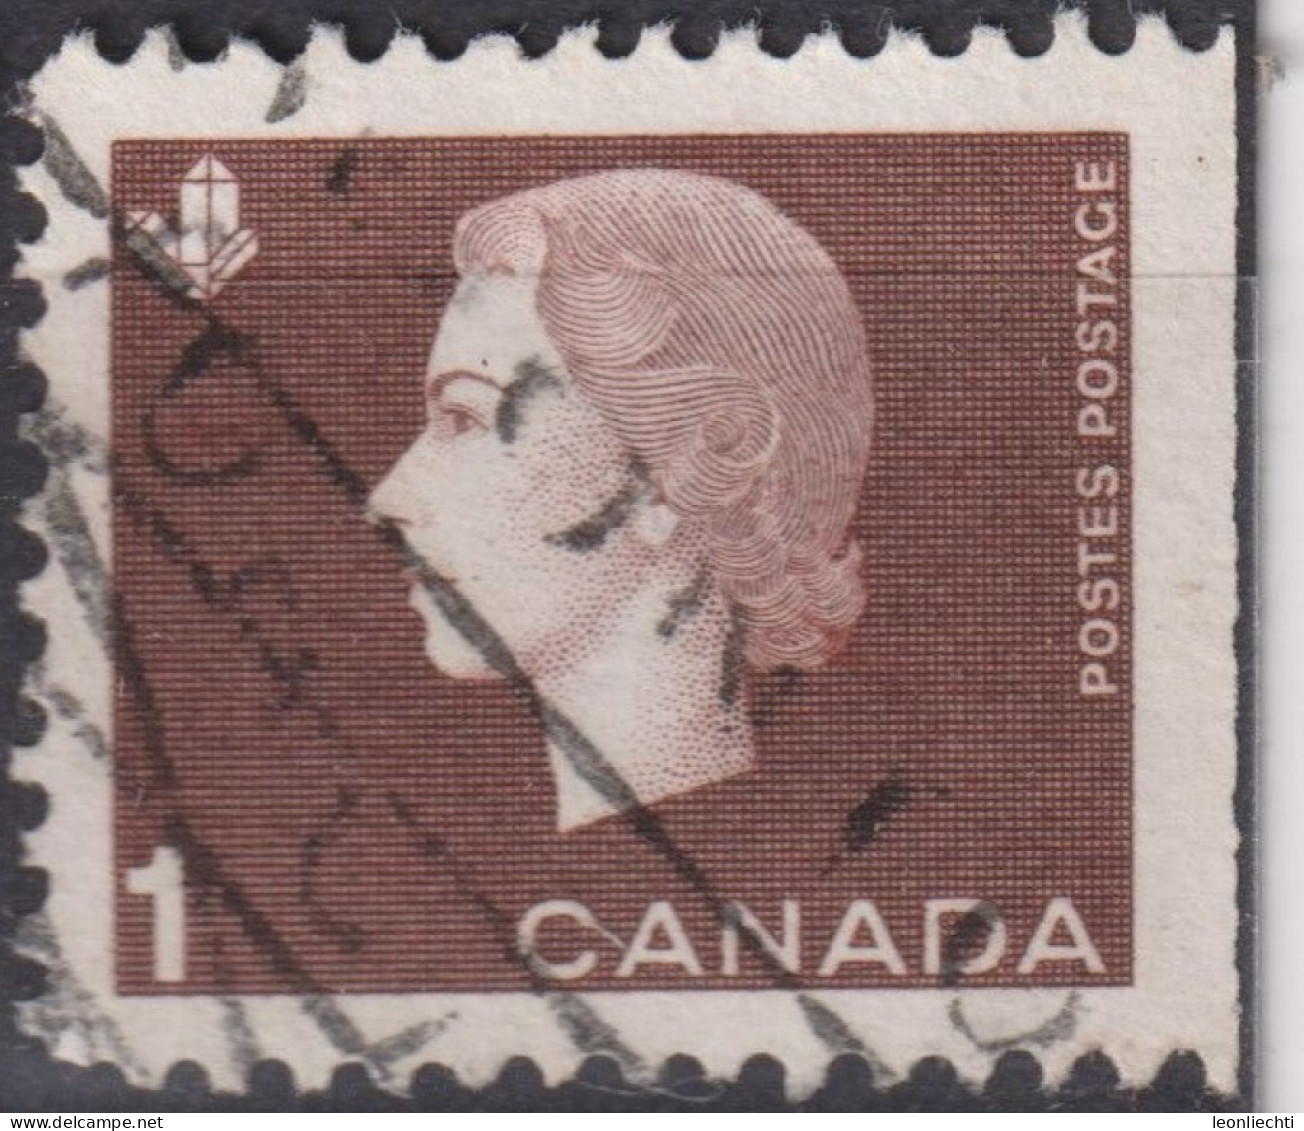 1963 Kanada ° Mi:CA 348Exr, Sn:CA 401asR, Queen Elizabeth II - 1962-63 - Cameo Issue - Gebruikt